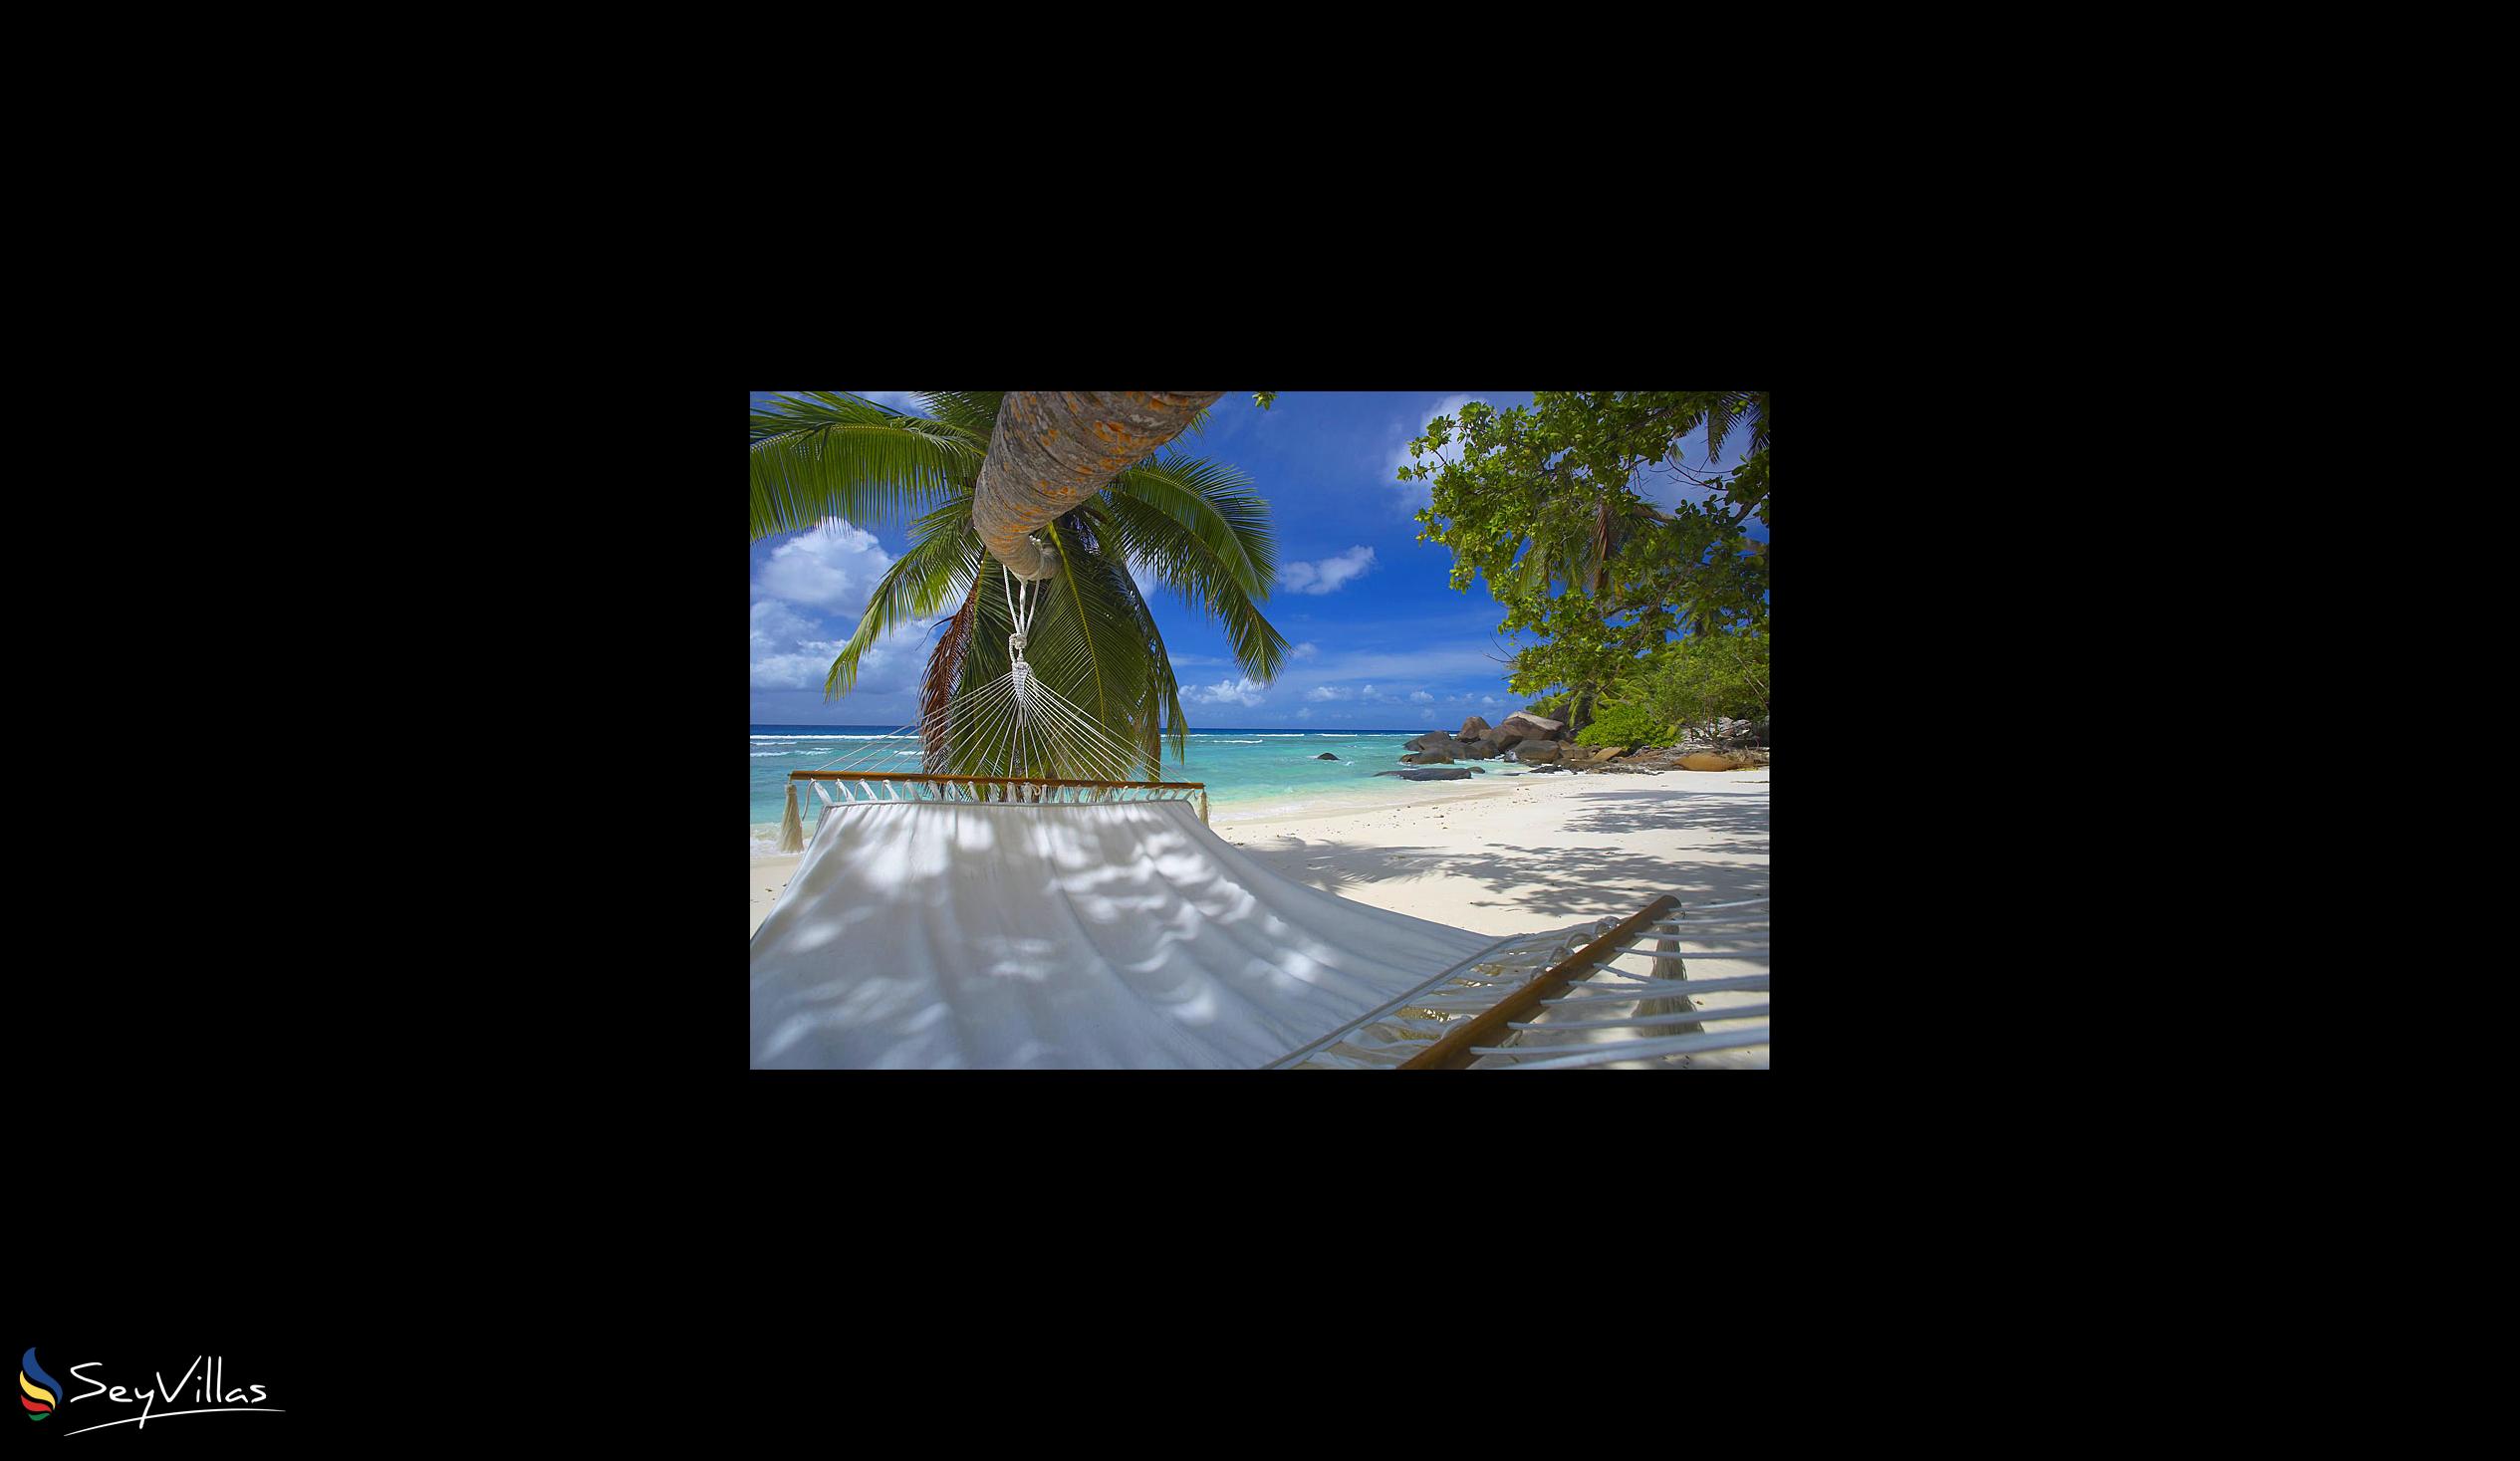 Photo 91: Hilton Seychelles Labriz Resort & Spa - Outdoor area - Silhouette Island (Seychelles)